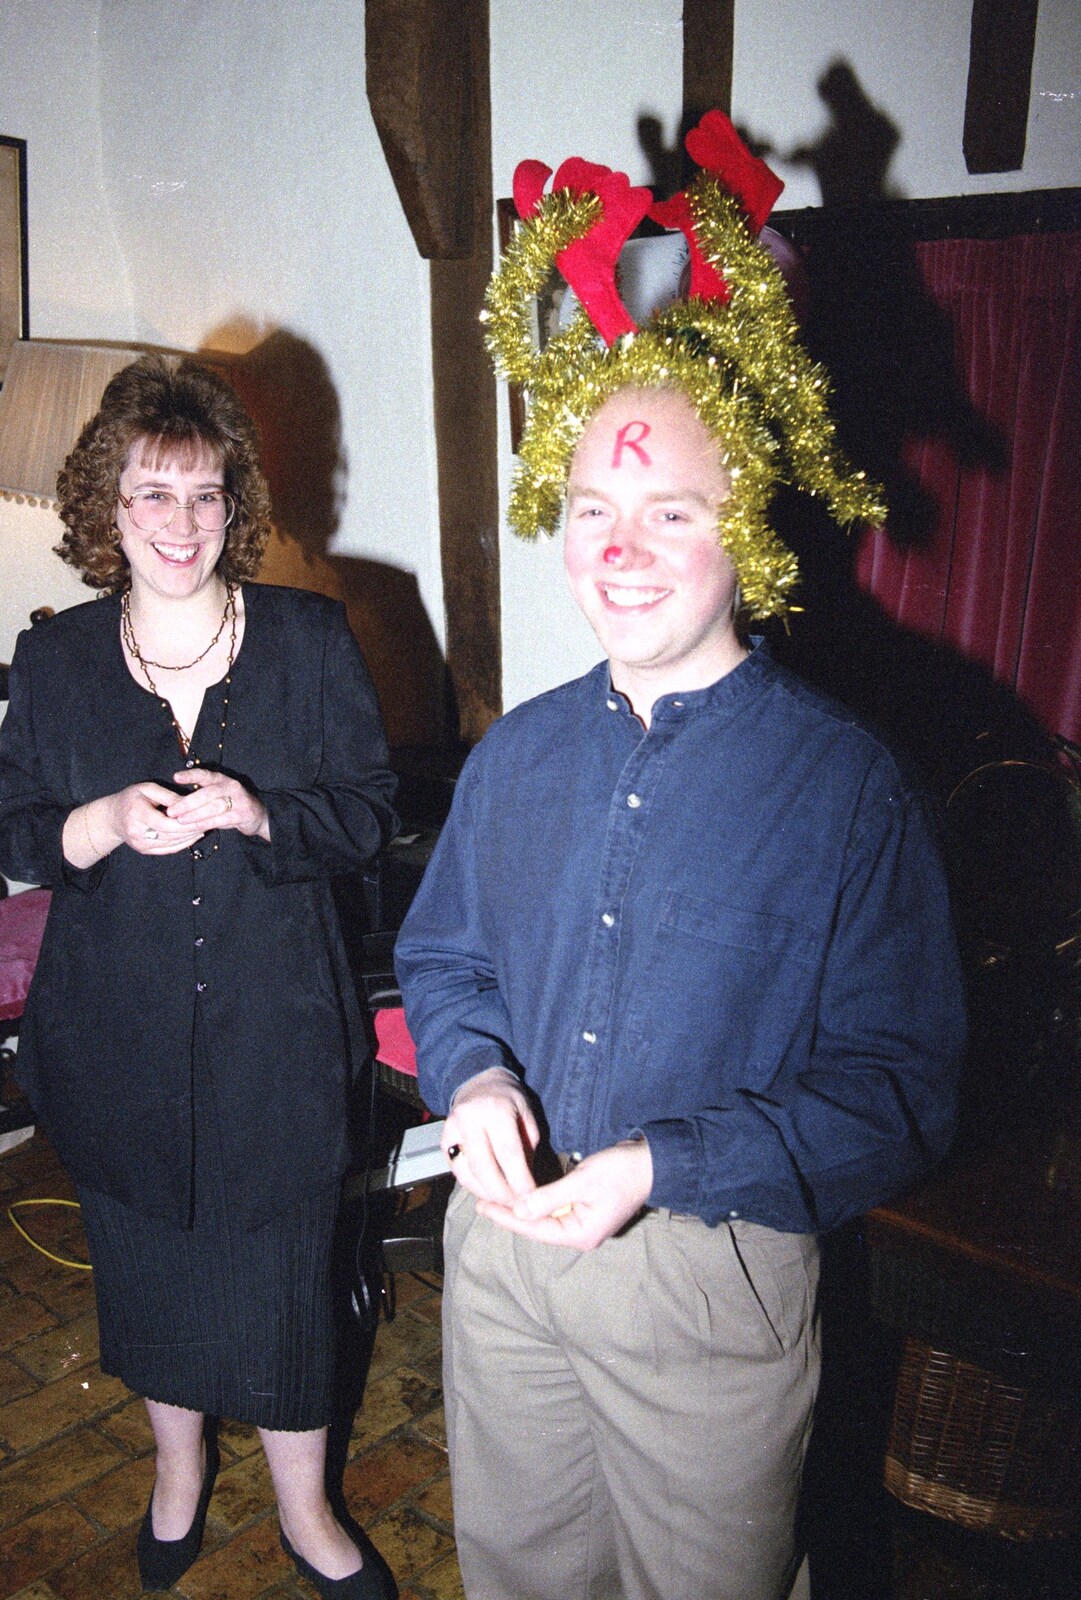 Comedy tinsel headgear from Geoff's Birthday, Stuston, Suffolk - 18th December 1995